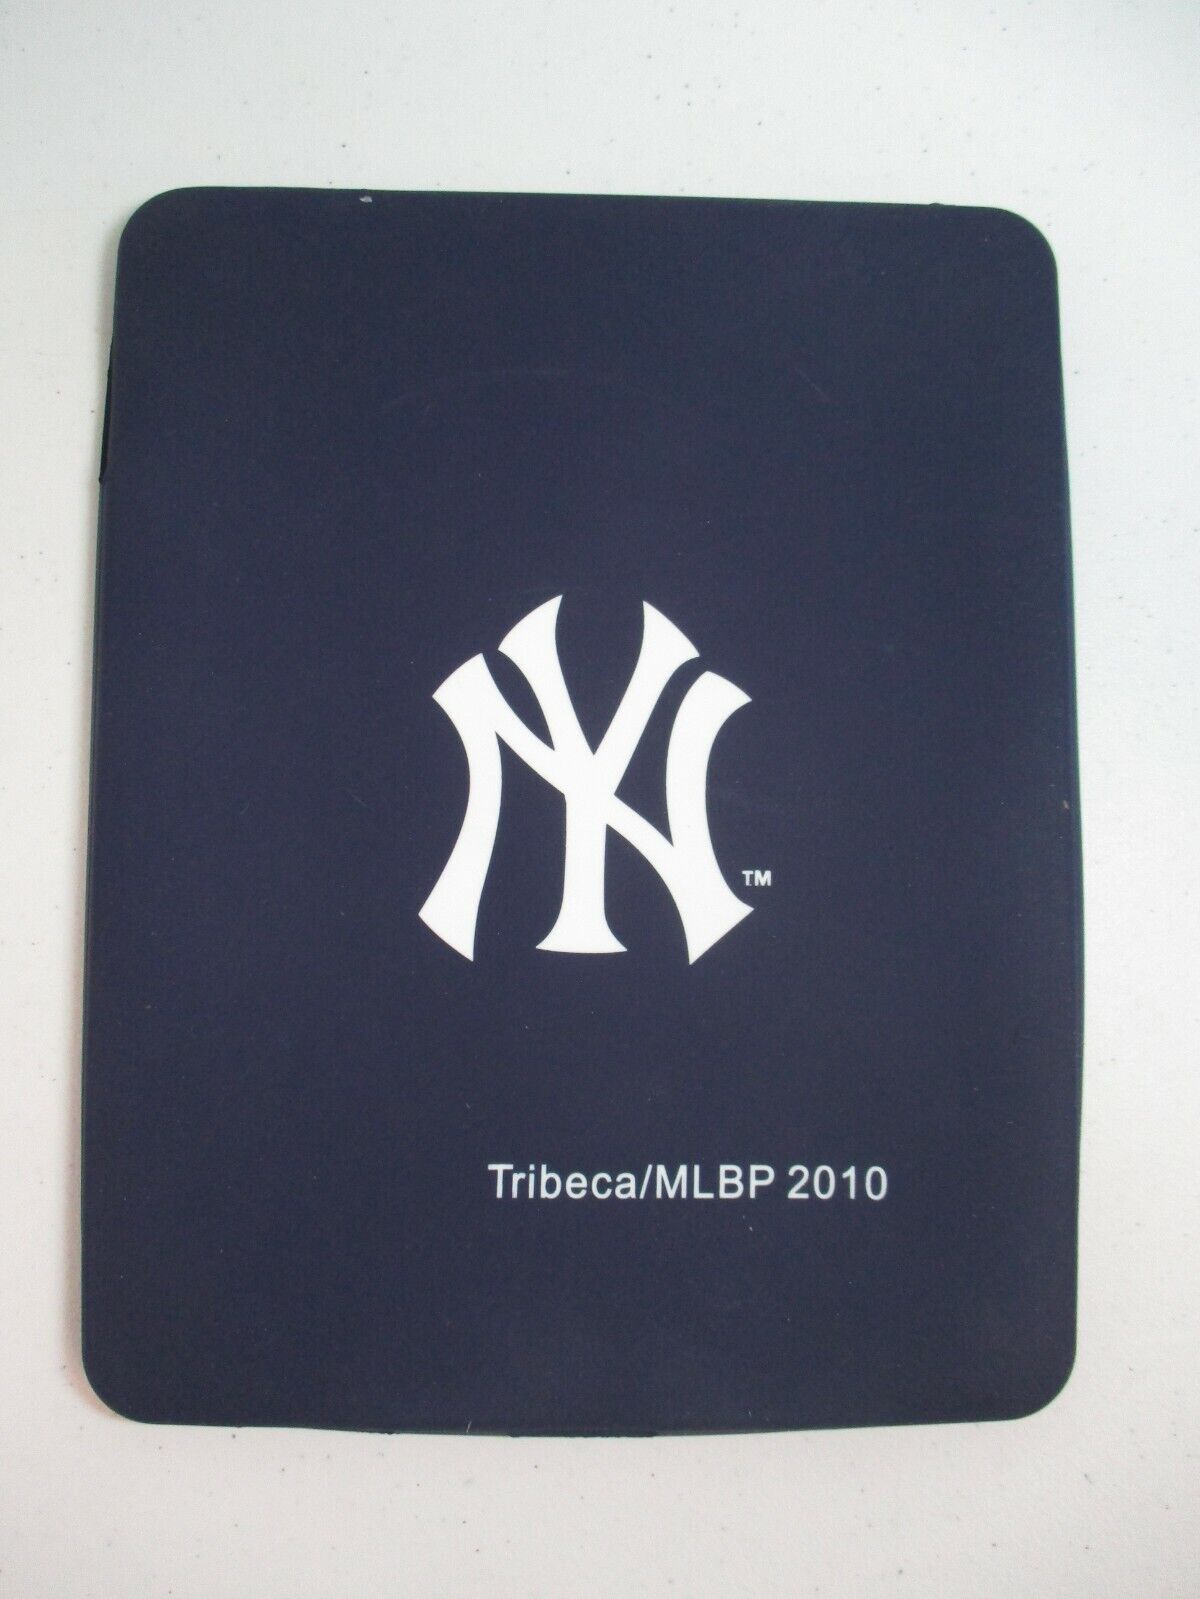 New York Yankees Tribeca/MLBP 2010 10" Silicone Tablet Cover Dark Blue/White